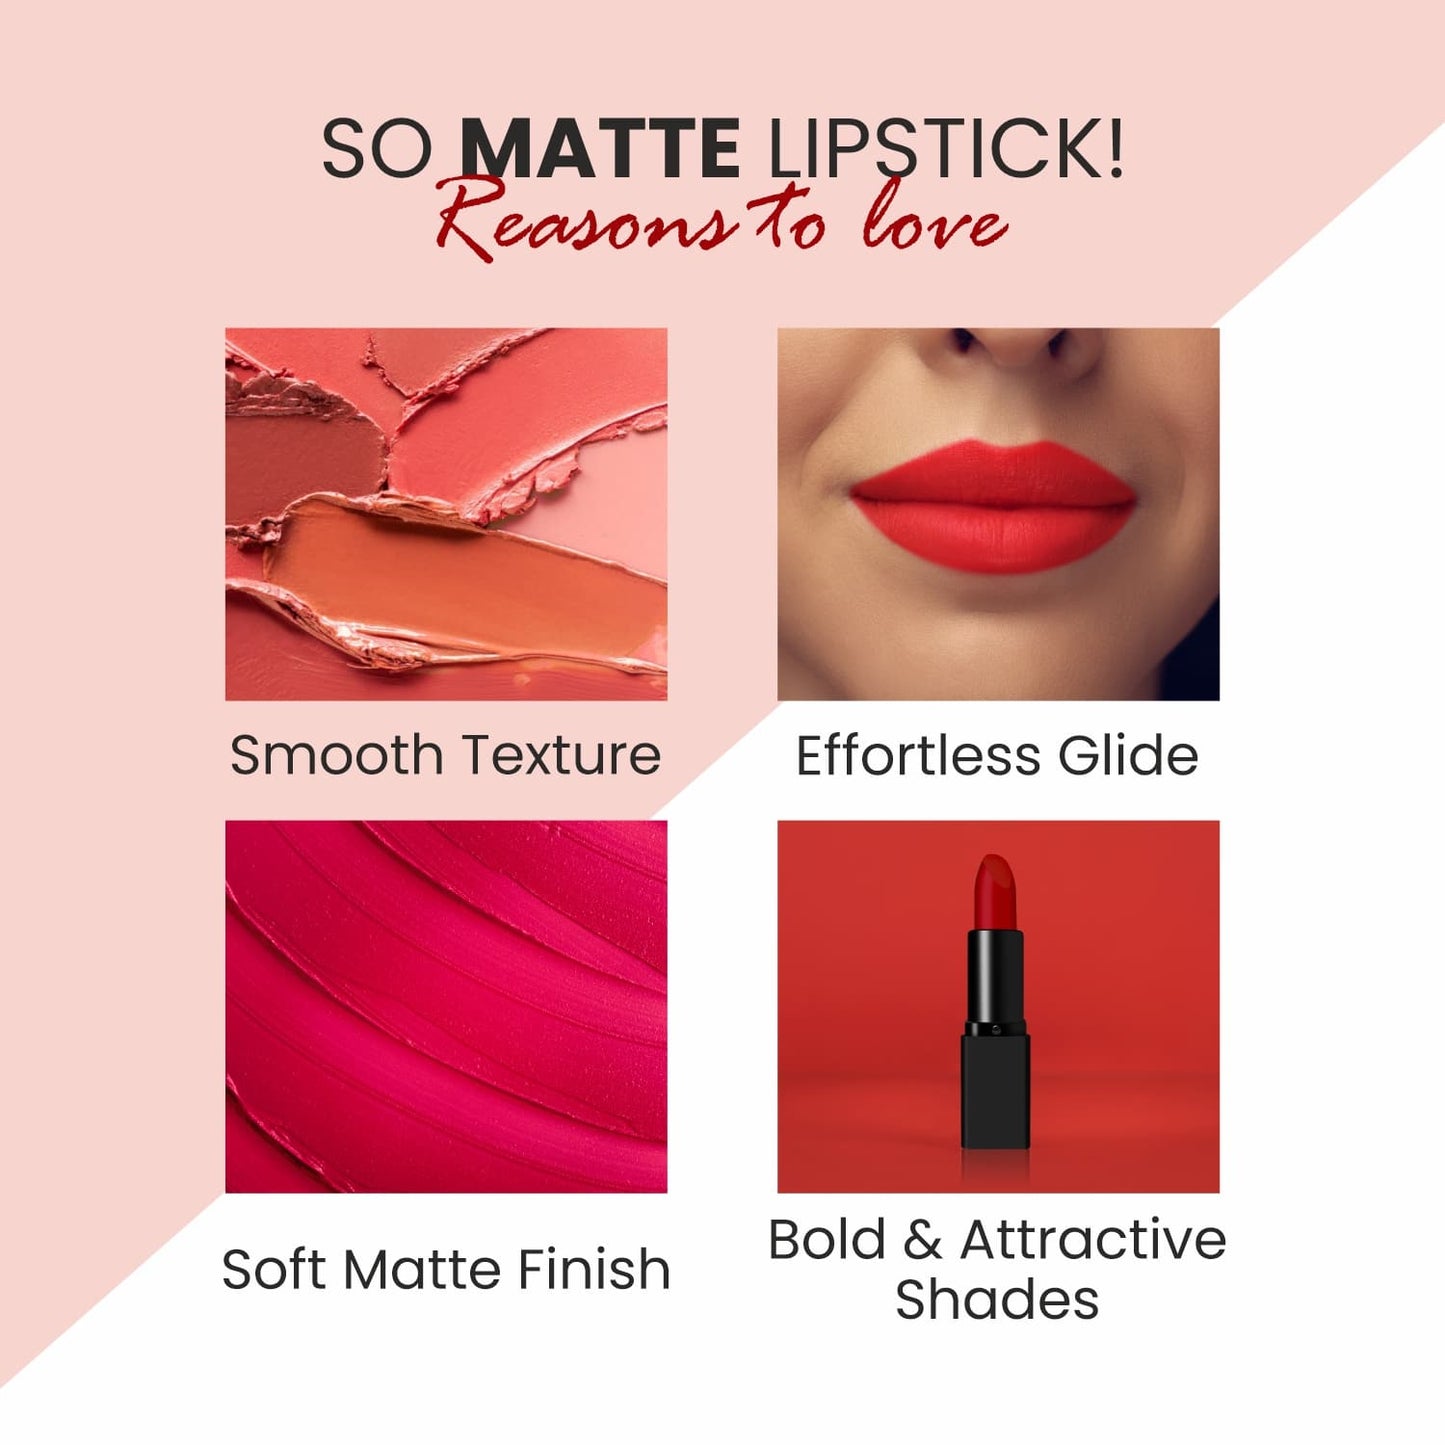 Wow Matte Lipstick - 06 Crush Chocolate